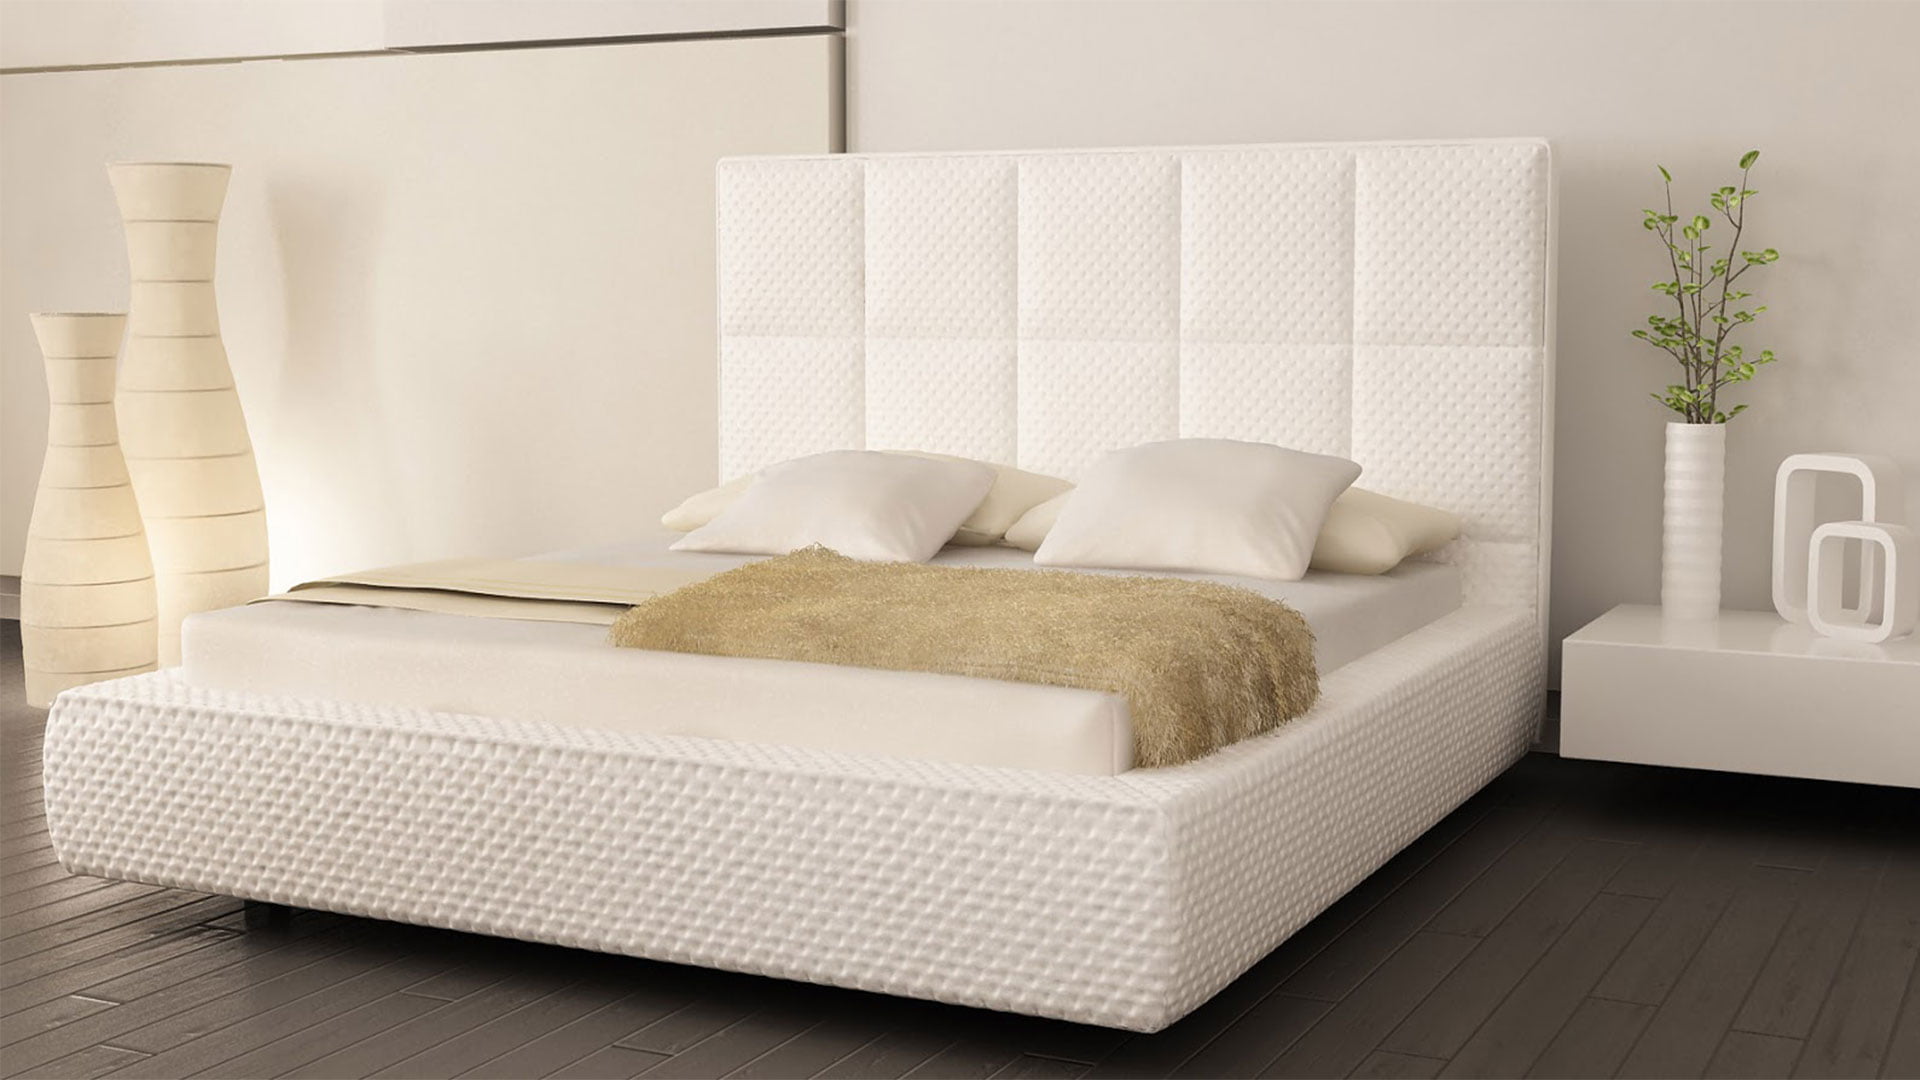 White bedroom design idea simple